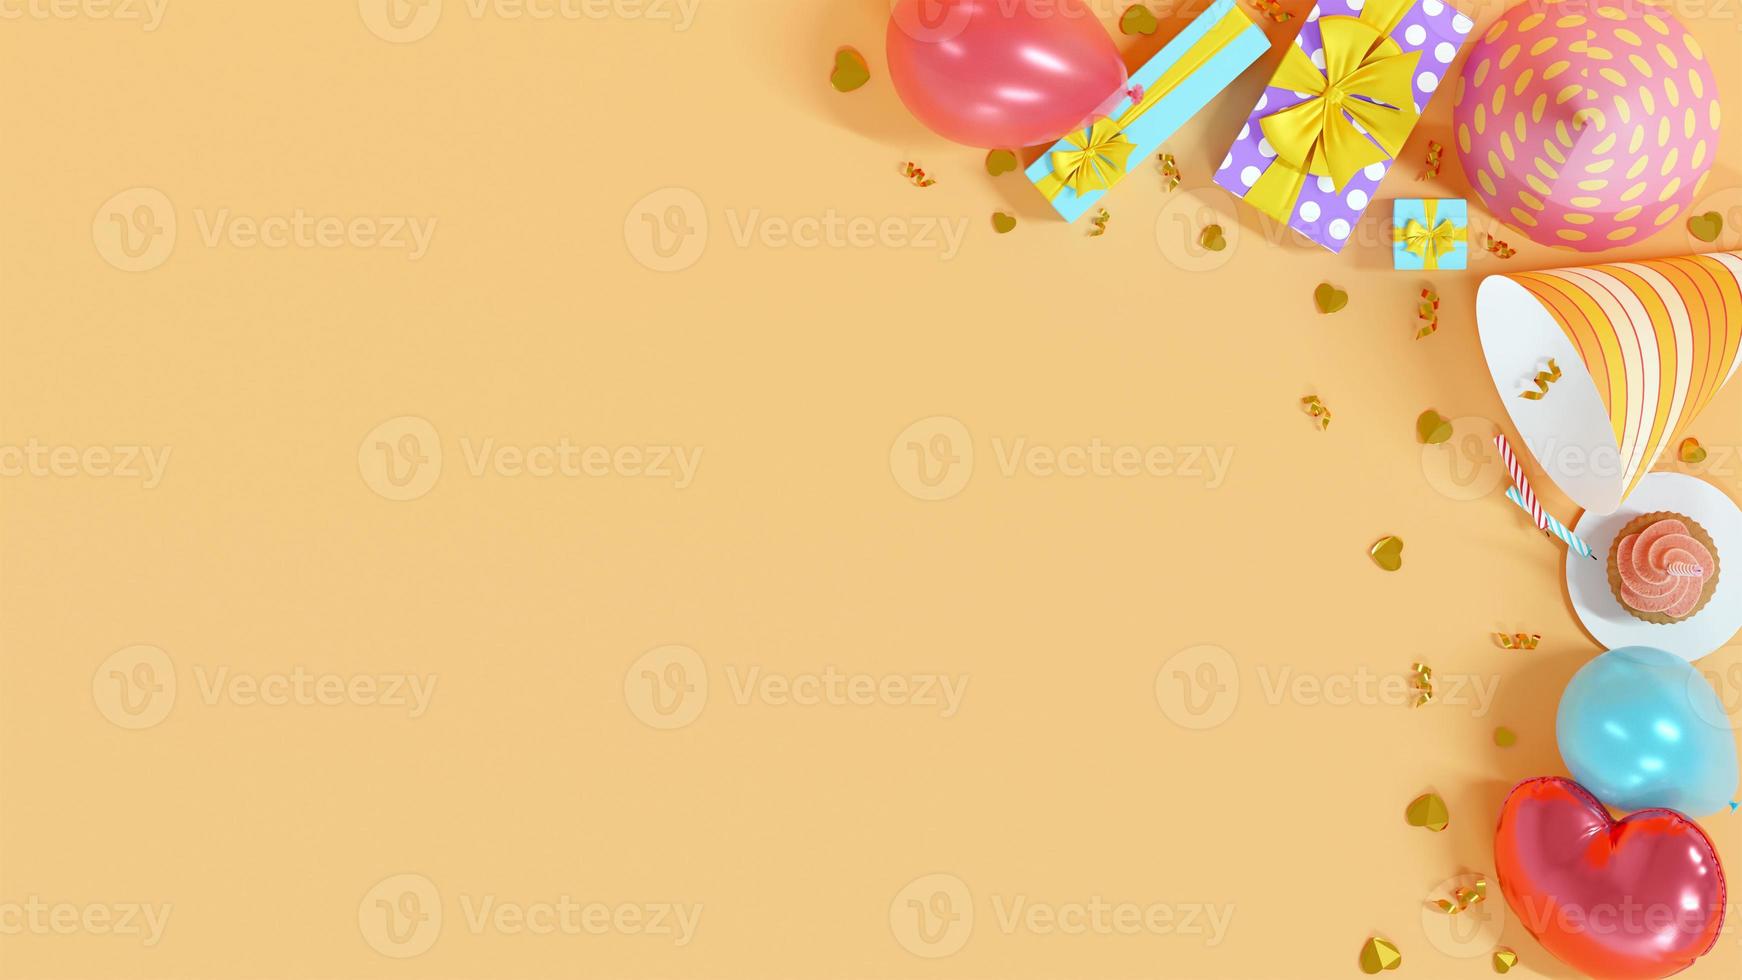 verjaardagsfeestje op gele achtergrond foto